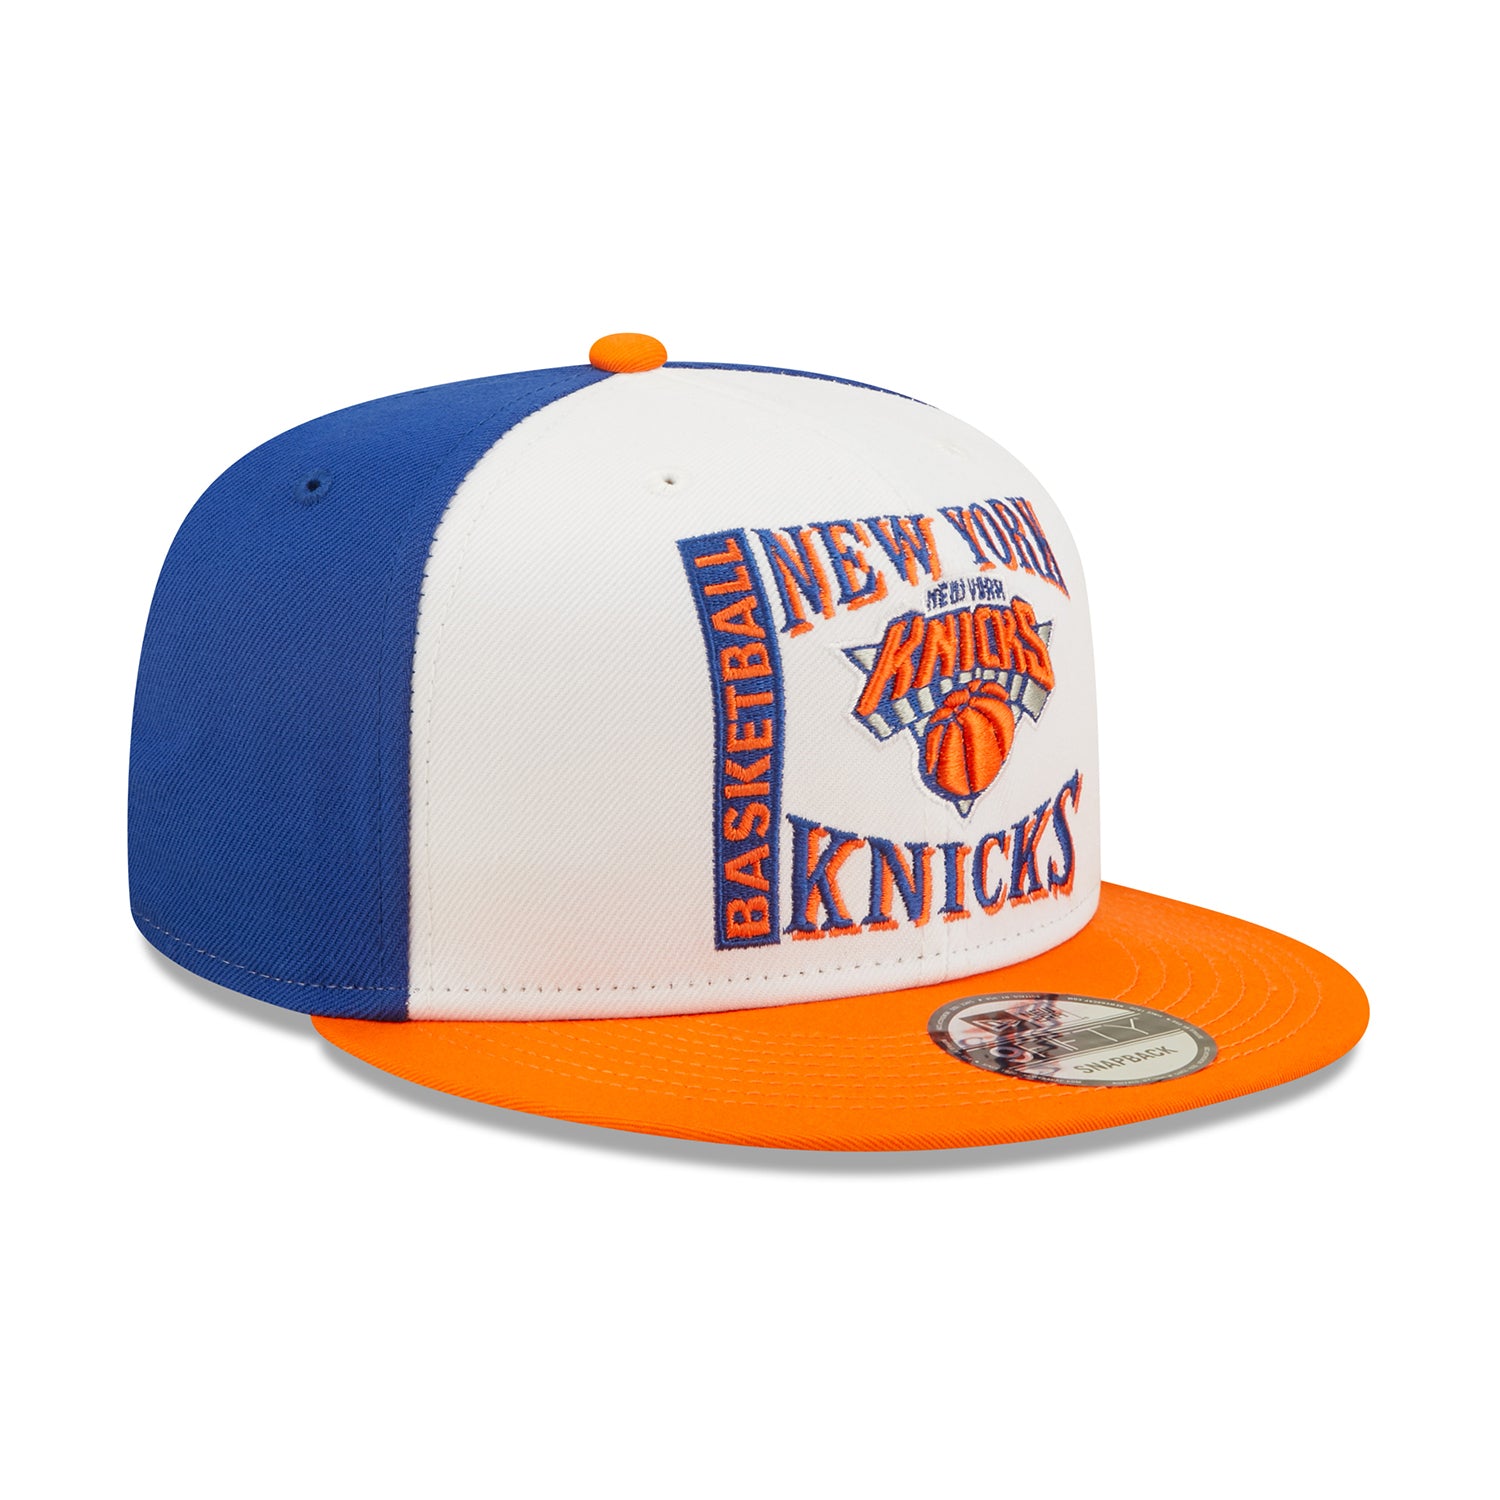 New Era Knicks Retro Sport Snapback In White, Blue & Orange - Angled Right Side View